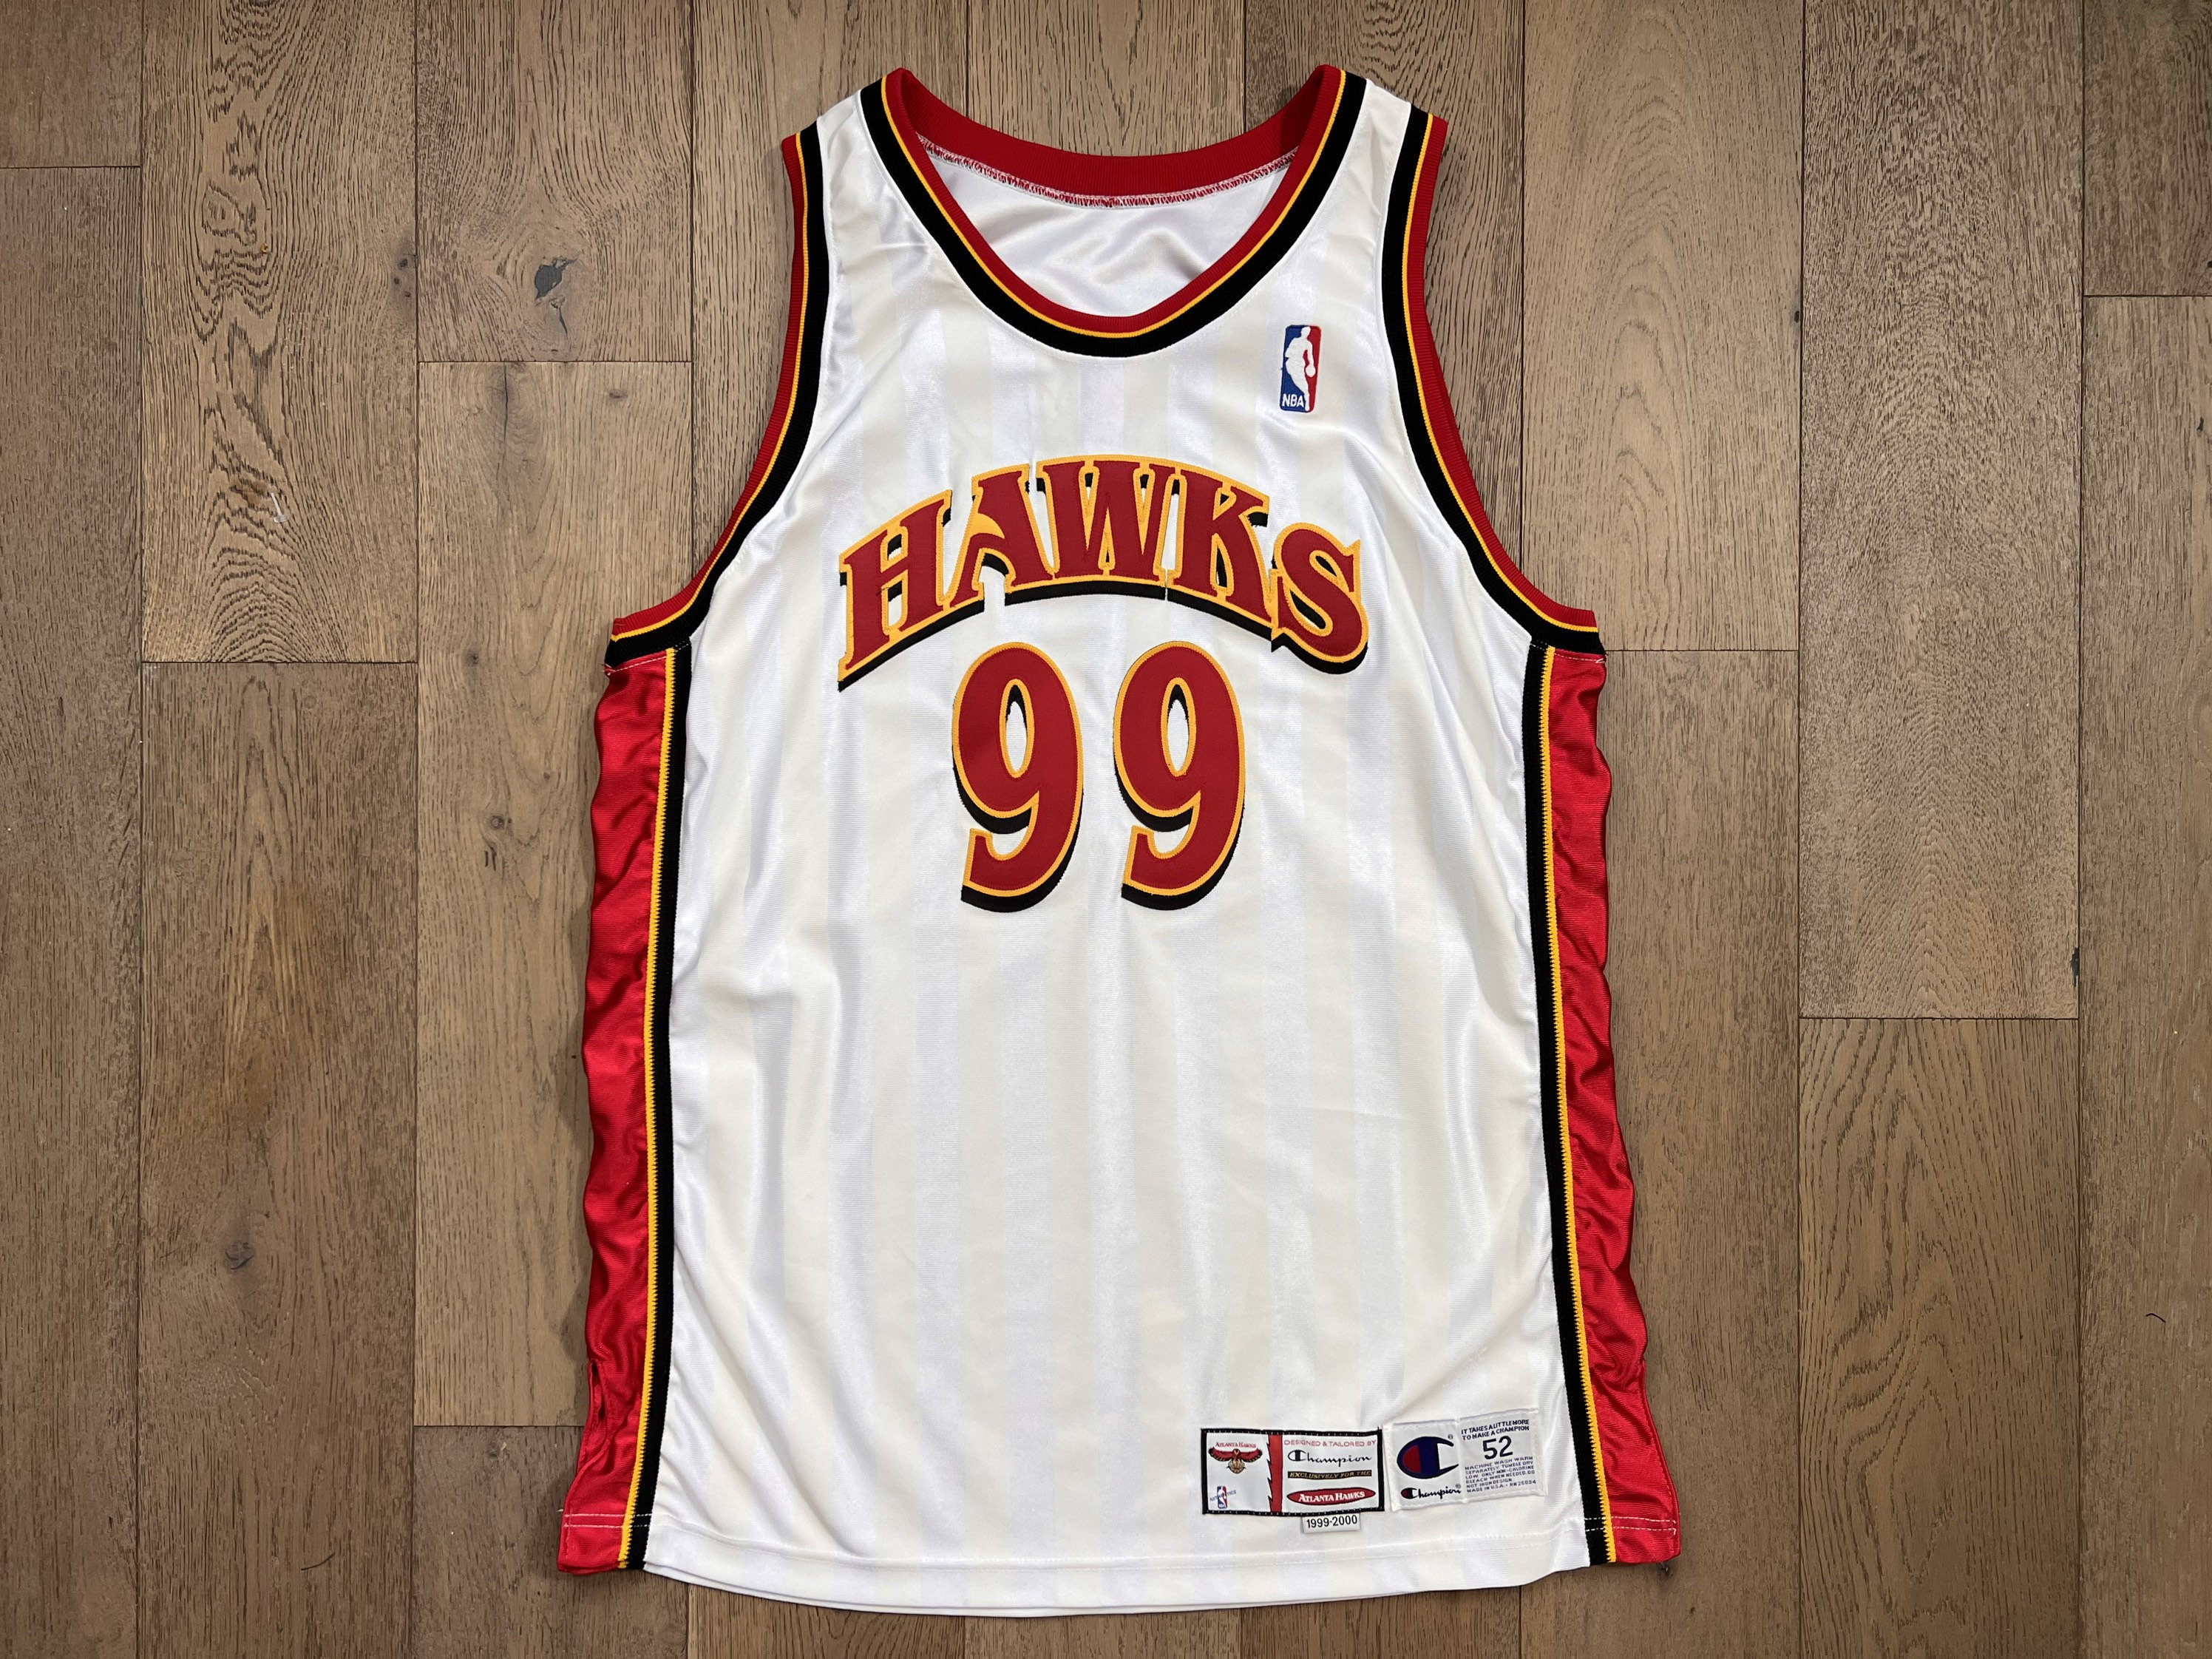 Atlanta Hawks Home Uniform  Sports jersey design, Basketball clothes,  Basketball design